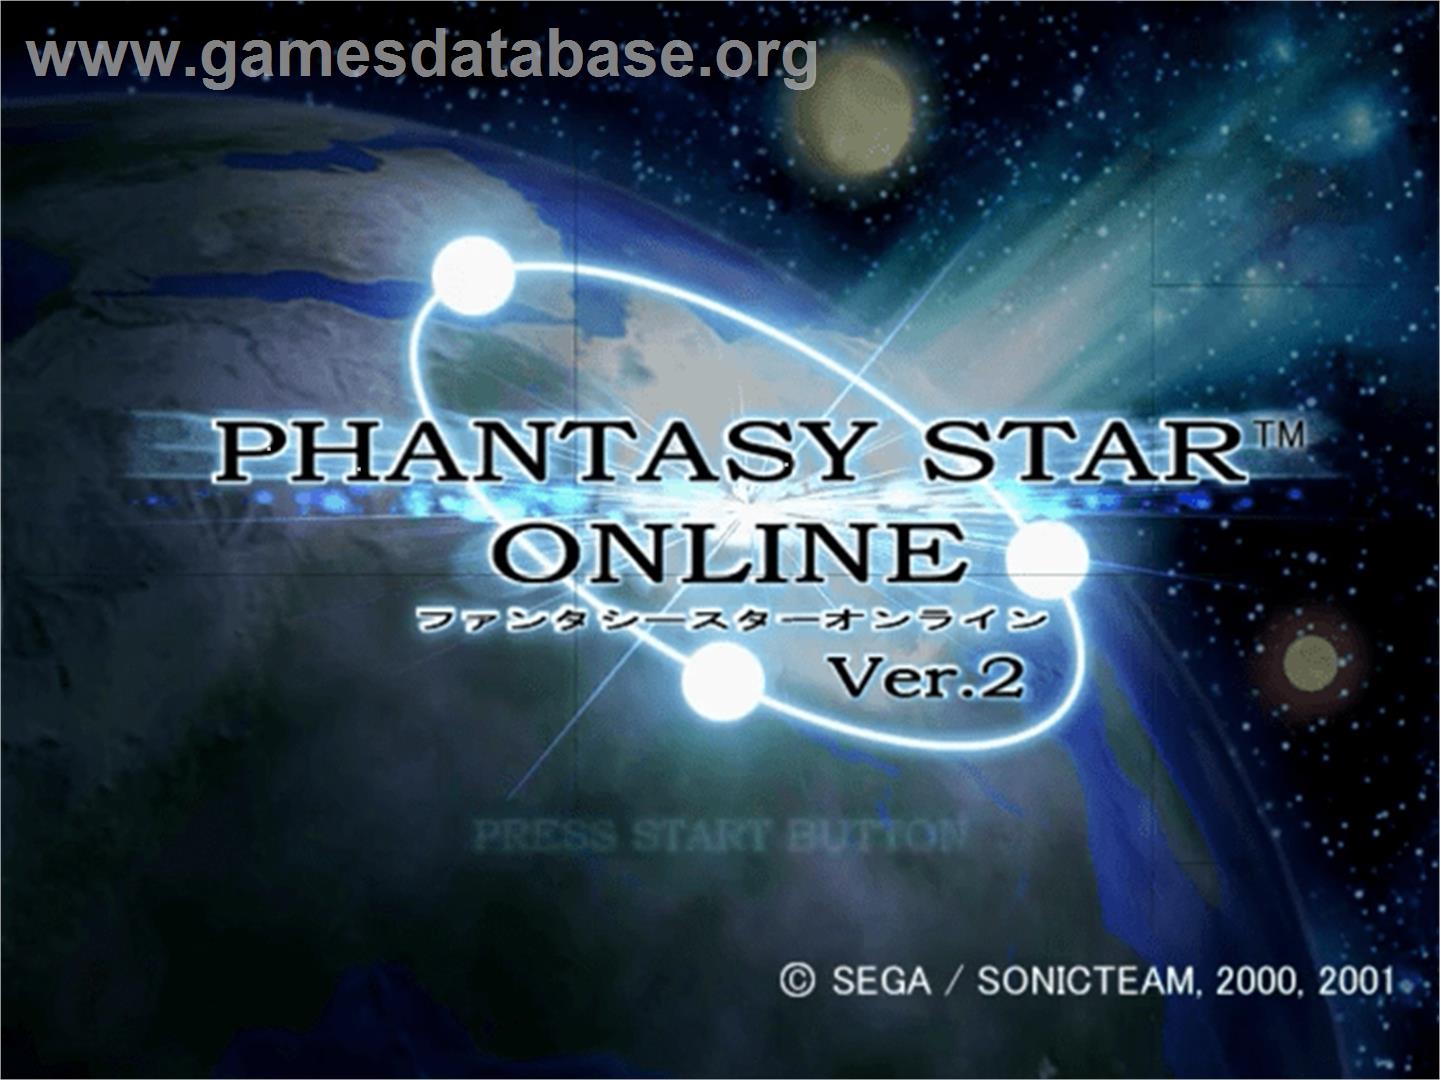 Phantasy Star Online Ver. 2 - Sega Dreamcast - Artwork - Title Screen